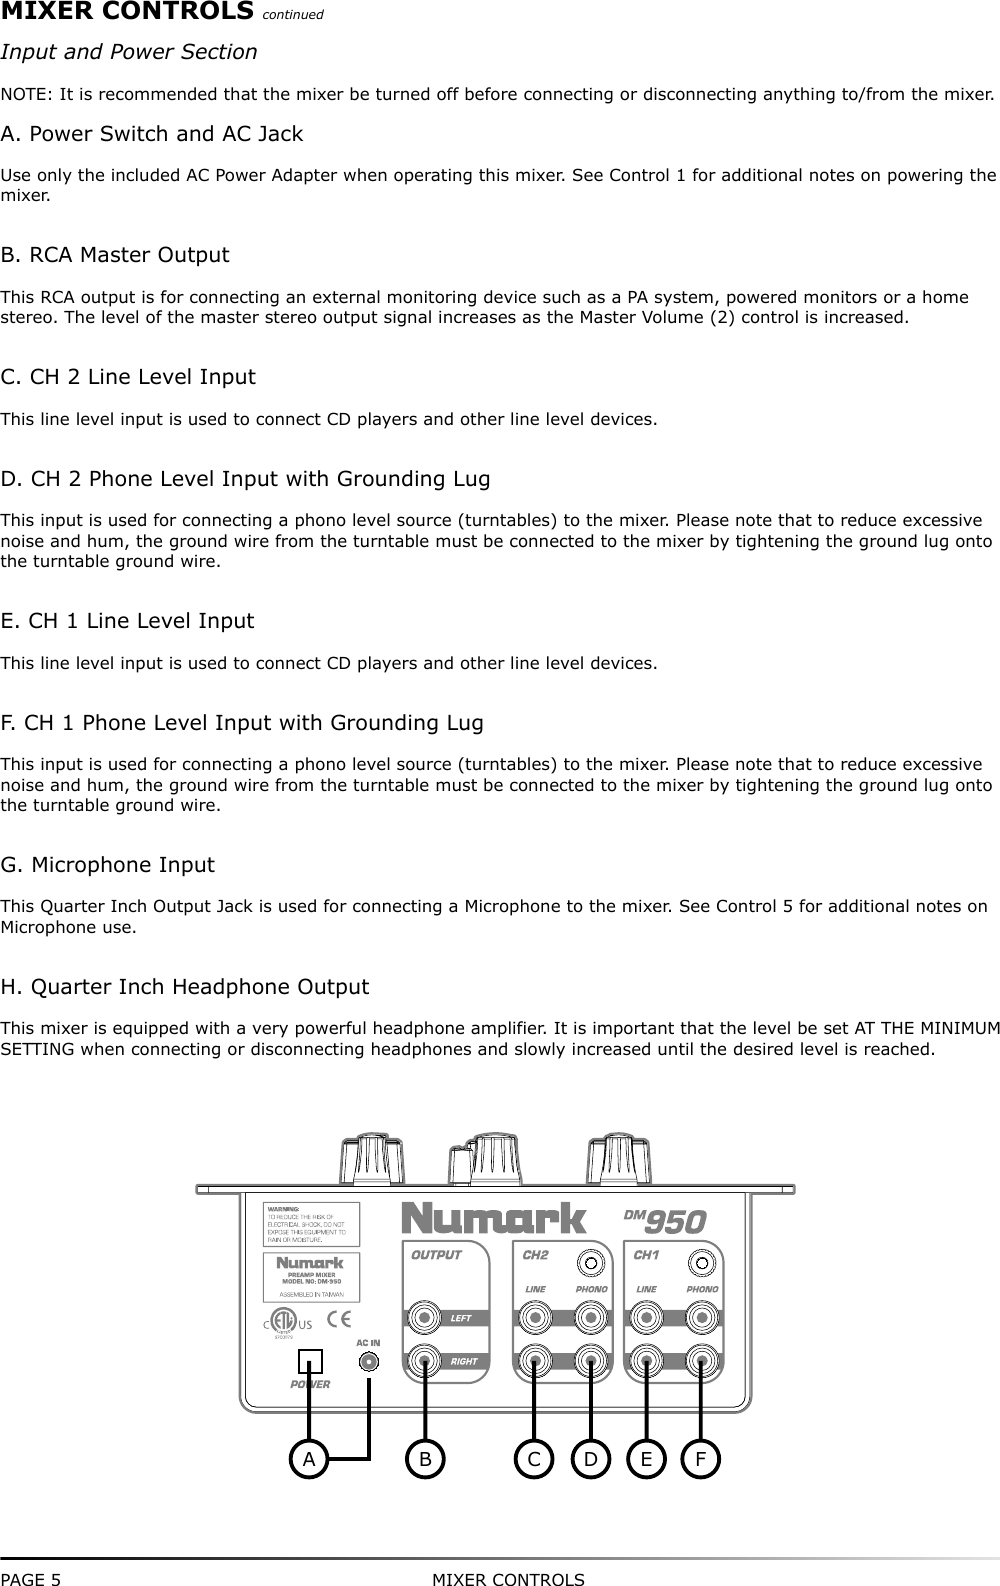 Page 6 of 12 - Numark-Industries Numark-Industries-Dm-950-Users-Manual- 950Manual0  Numark-industries-dm-950-users-manual